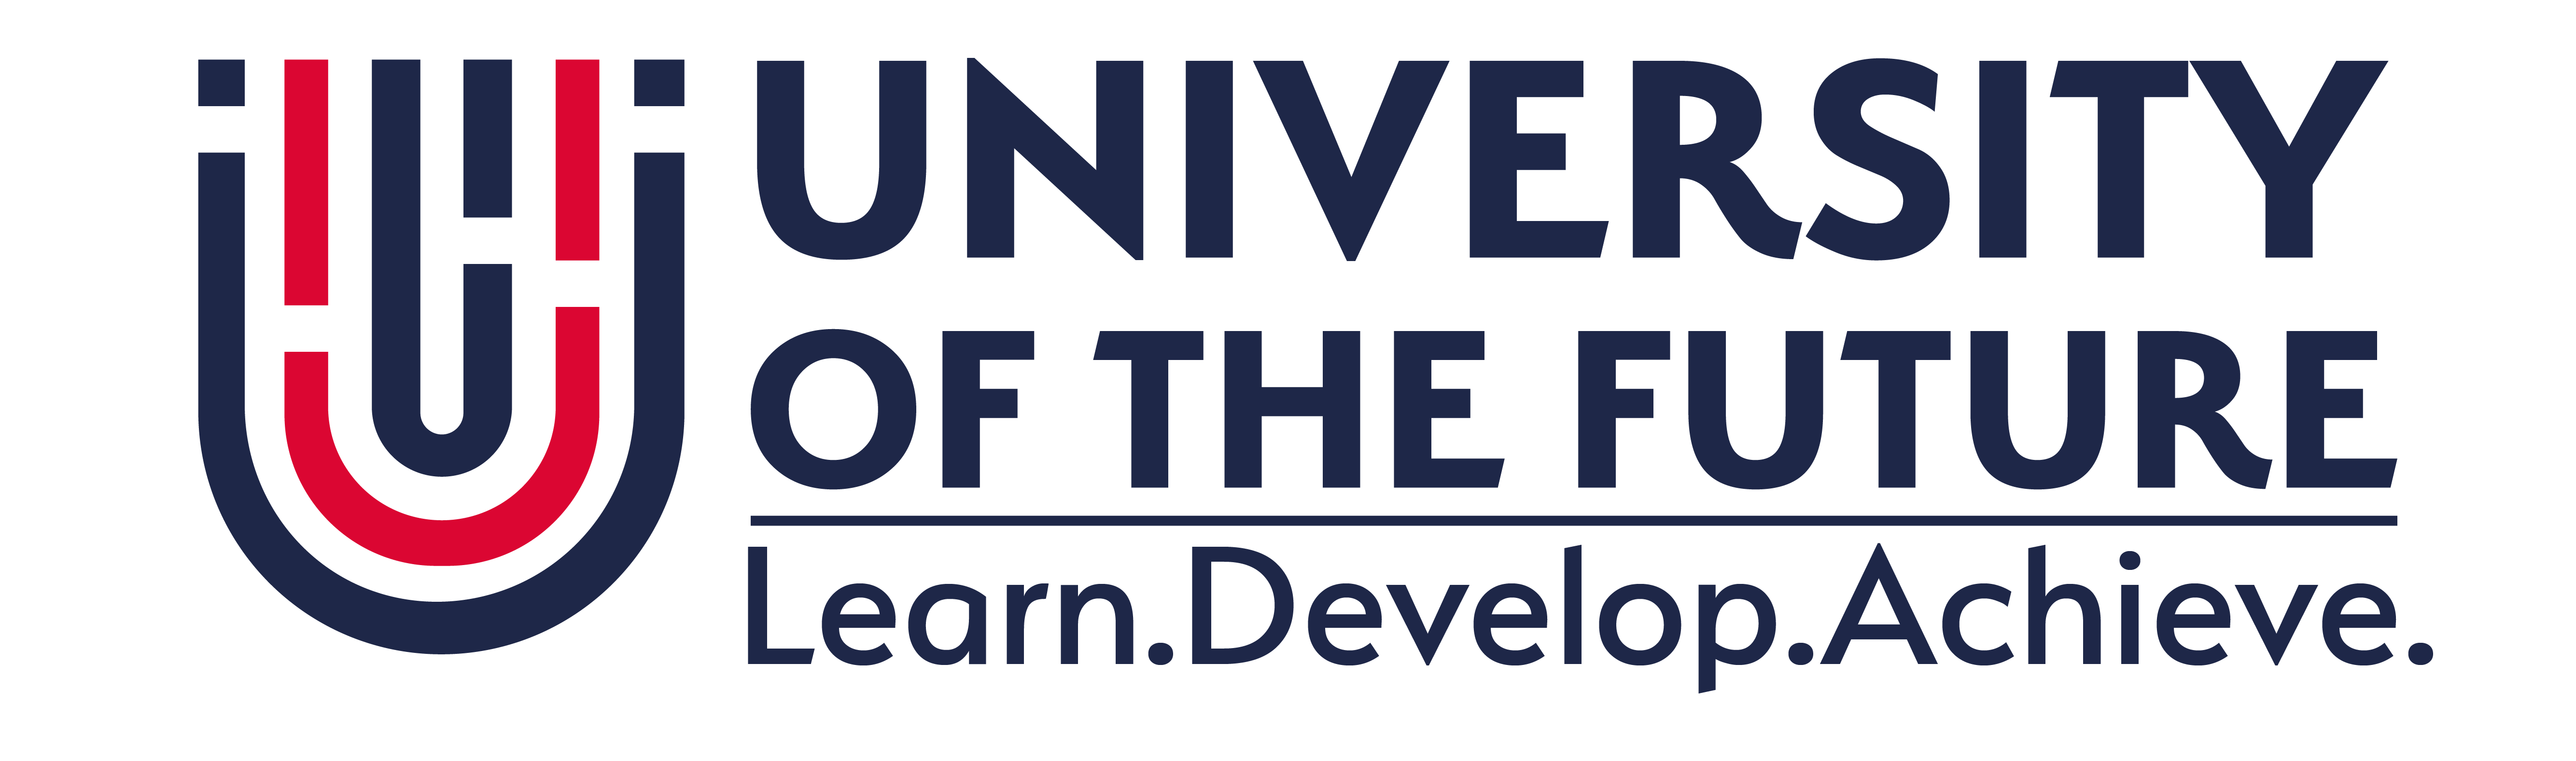 University of the Future логотип. The Future University.